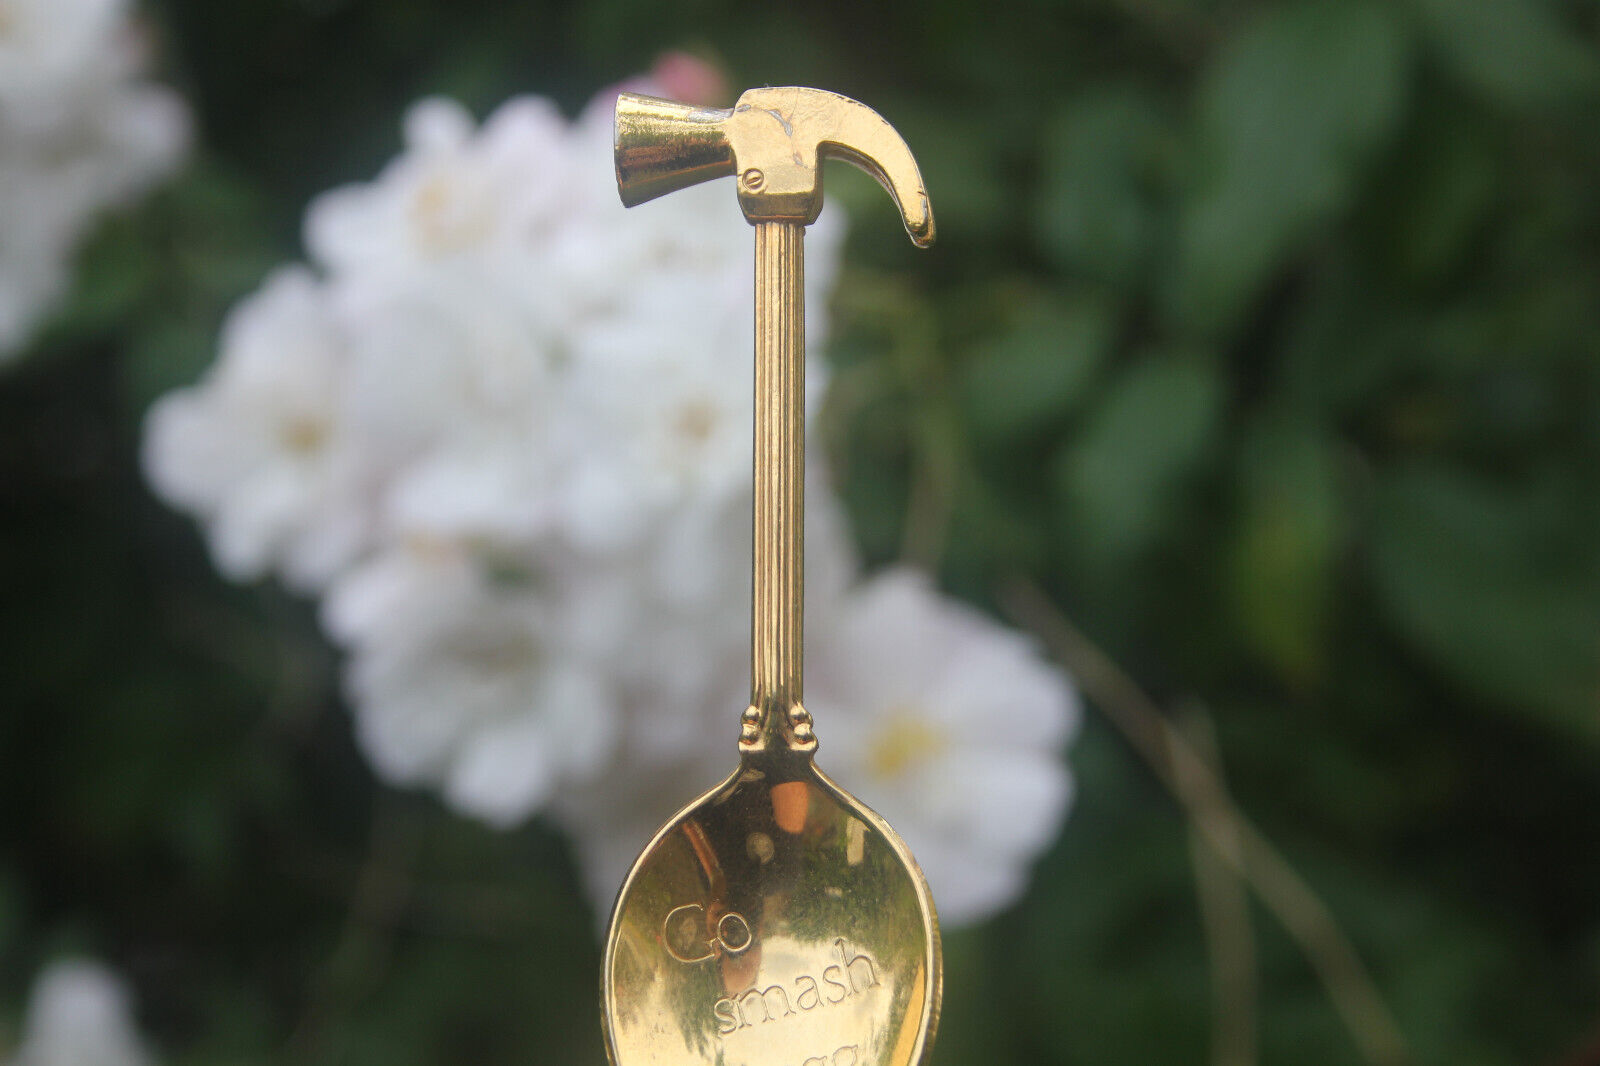 Vintage Spoon Hammer Shaped Go Smash an Egg Gold Coloured Breakfast Easter Gift